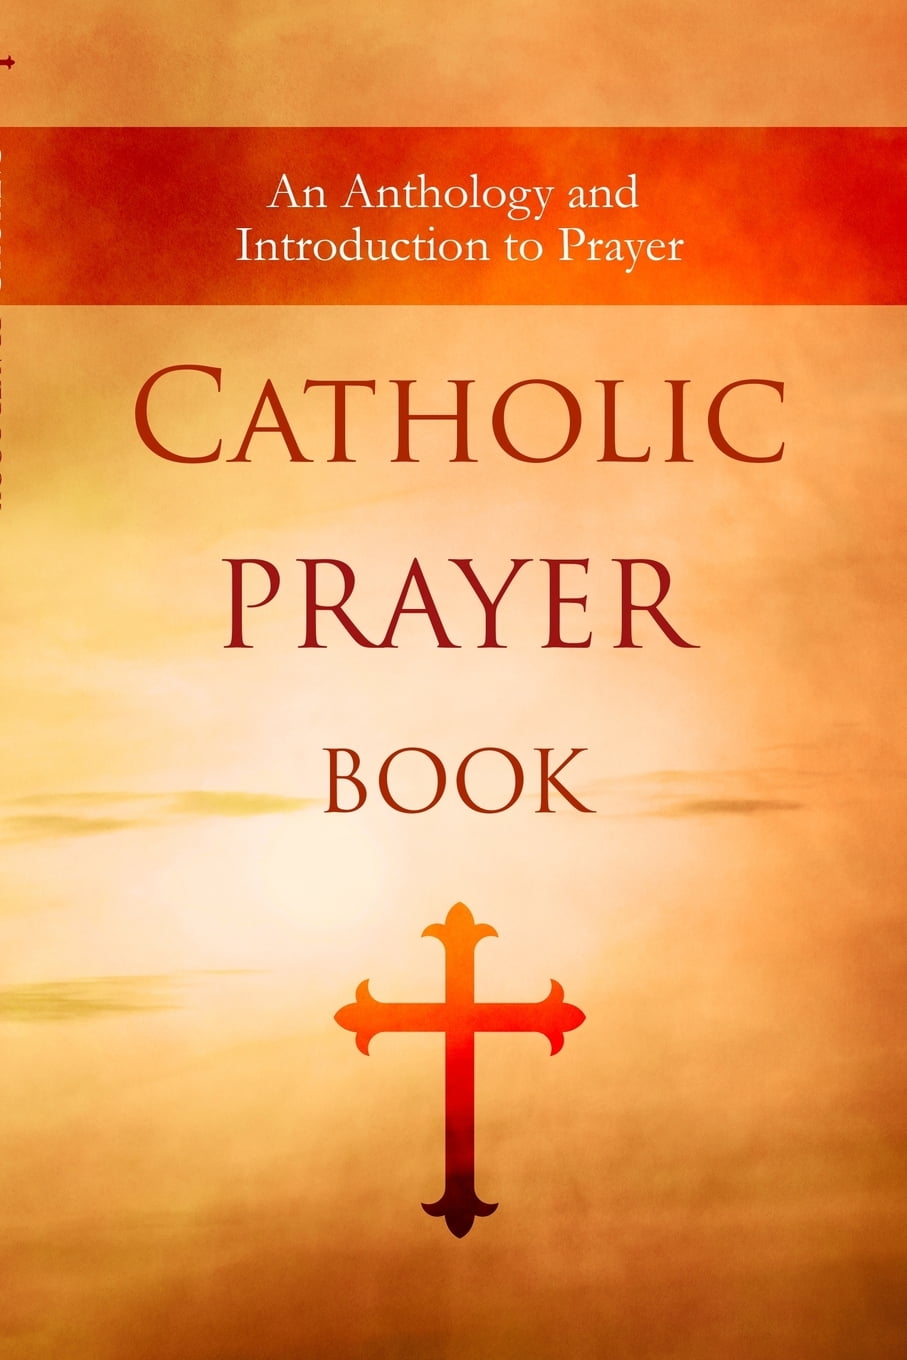 Catholic Prayer Book An Anthology And Introduction To Prayer